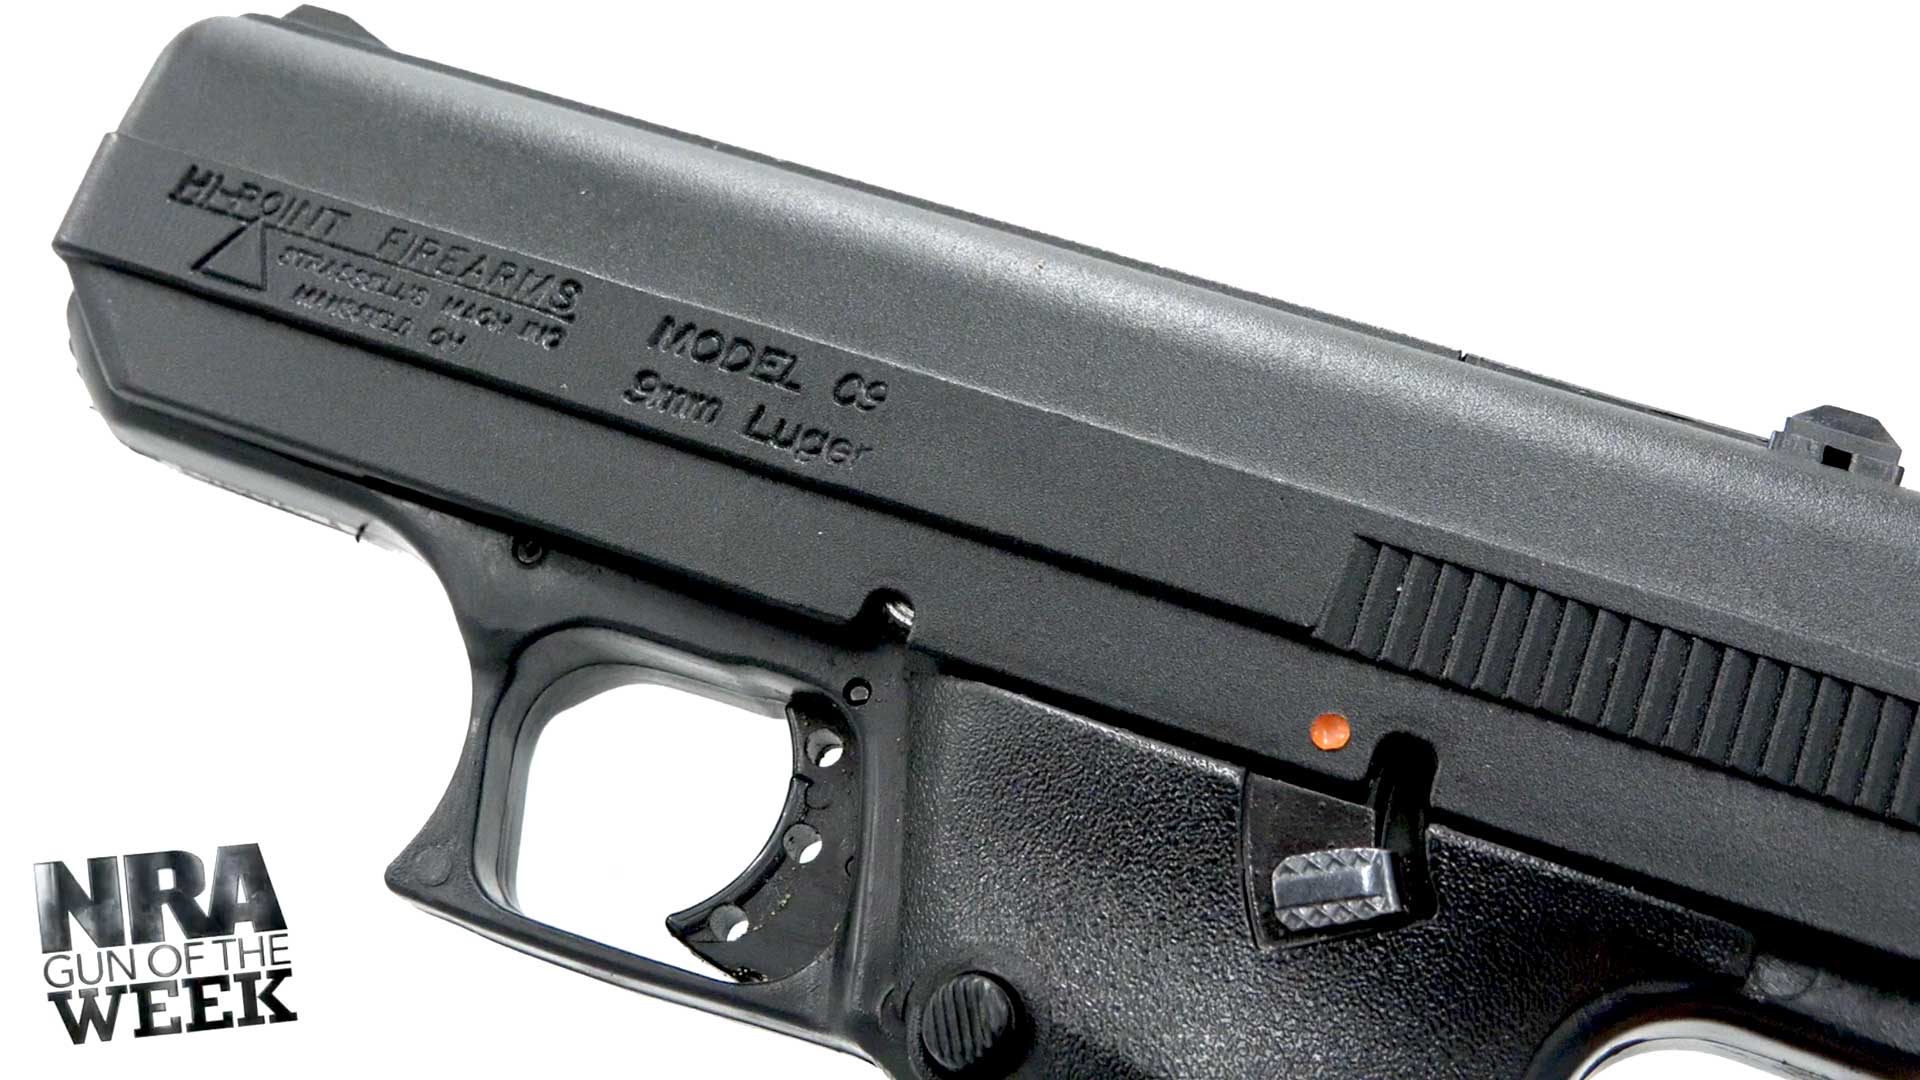 left side gun handgun pistol black metal details slide trigger frame text on image noting "NRA GUN OF THE WEEK"